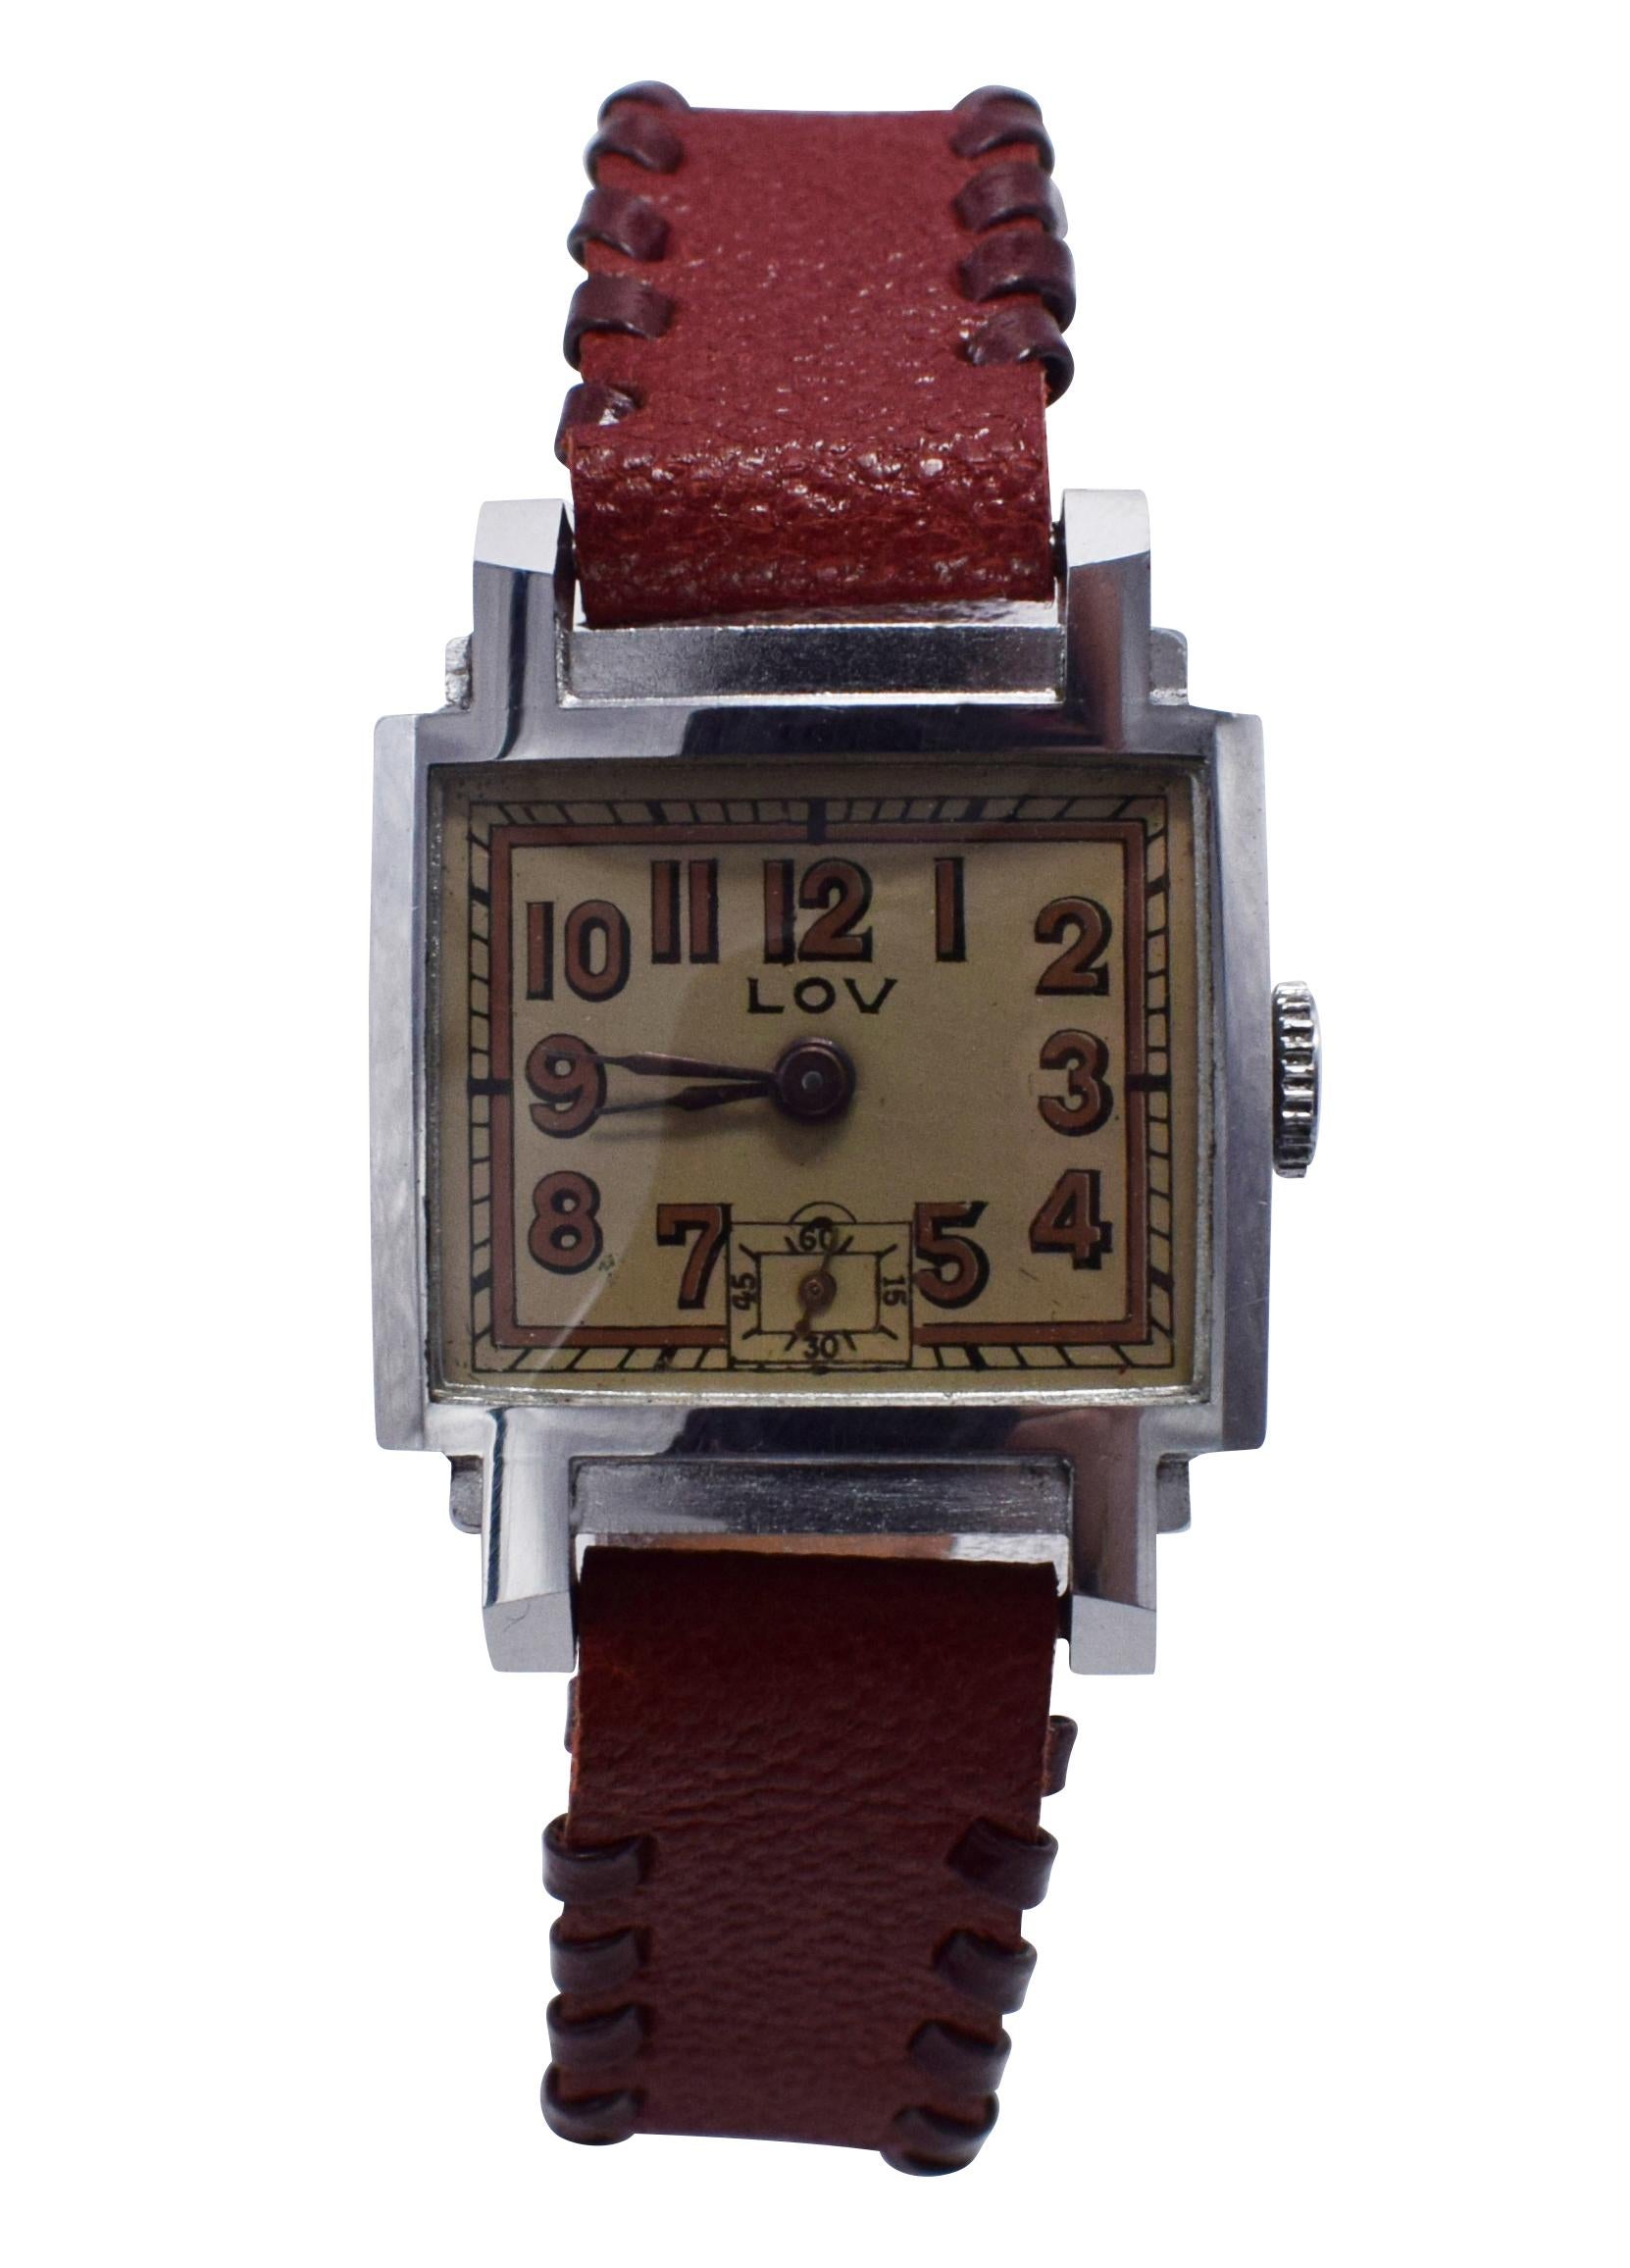 Original Art Deco Gents Wrist Watch by Lov/ Never Worn, circa 1930 1